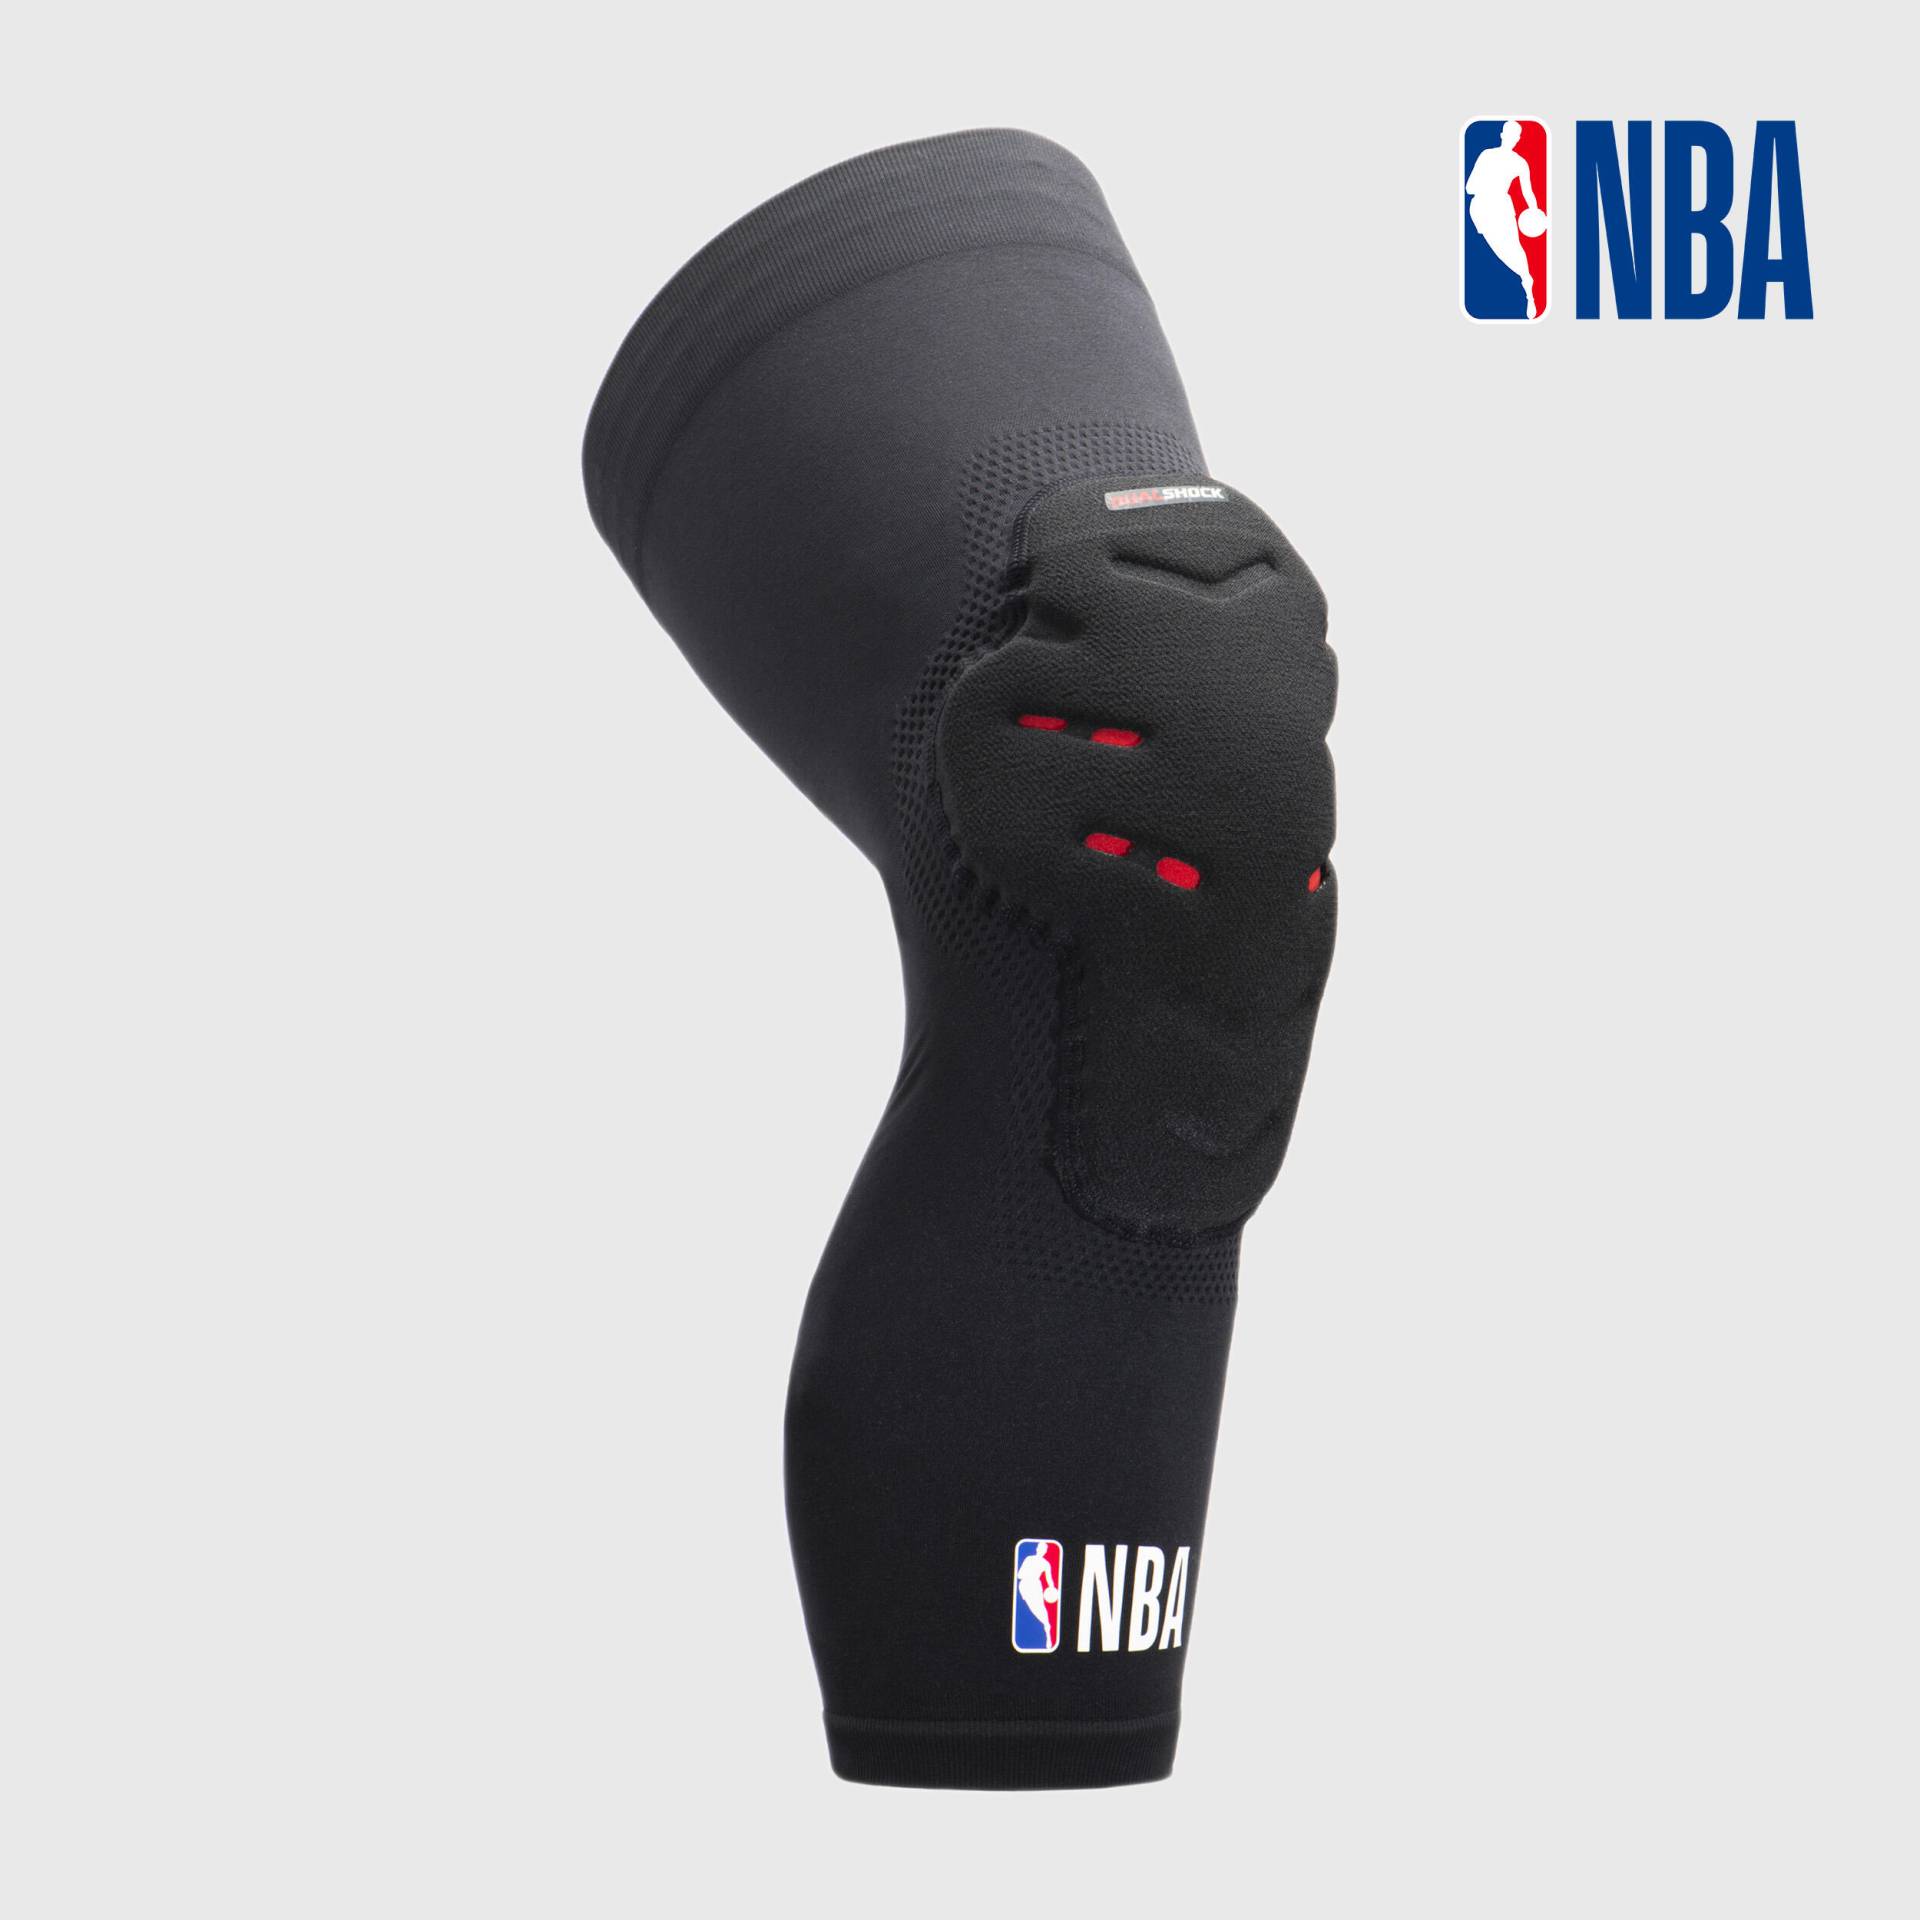 Kinder Kniebandage Basketball KP500 NBA Protector schwarz im Doppelpack von TARMAK